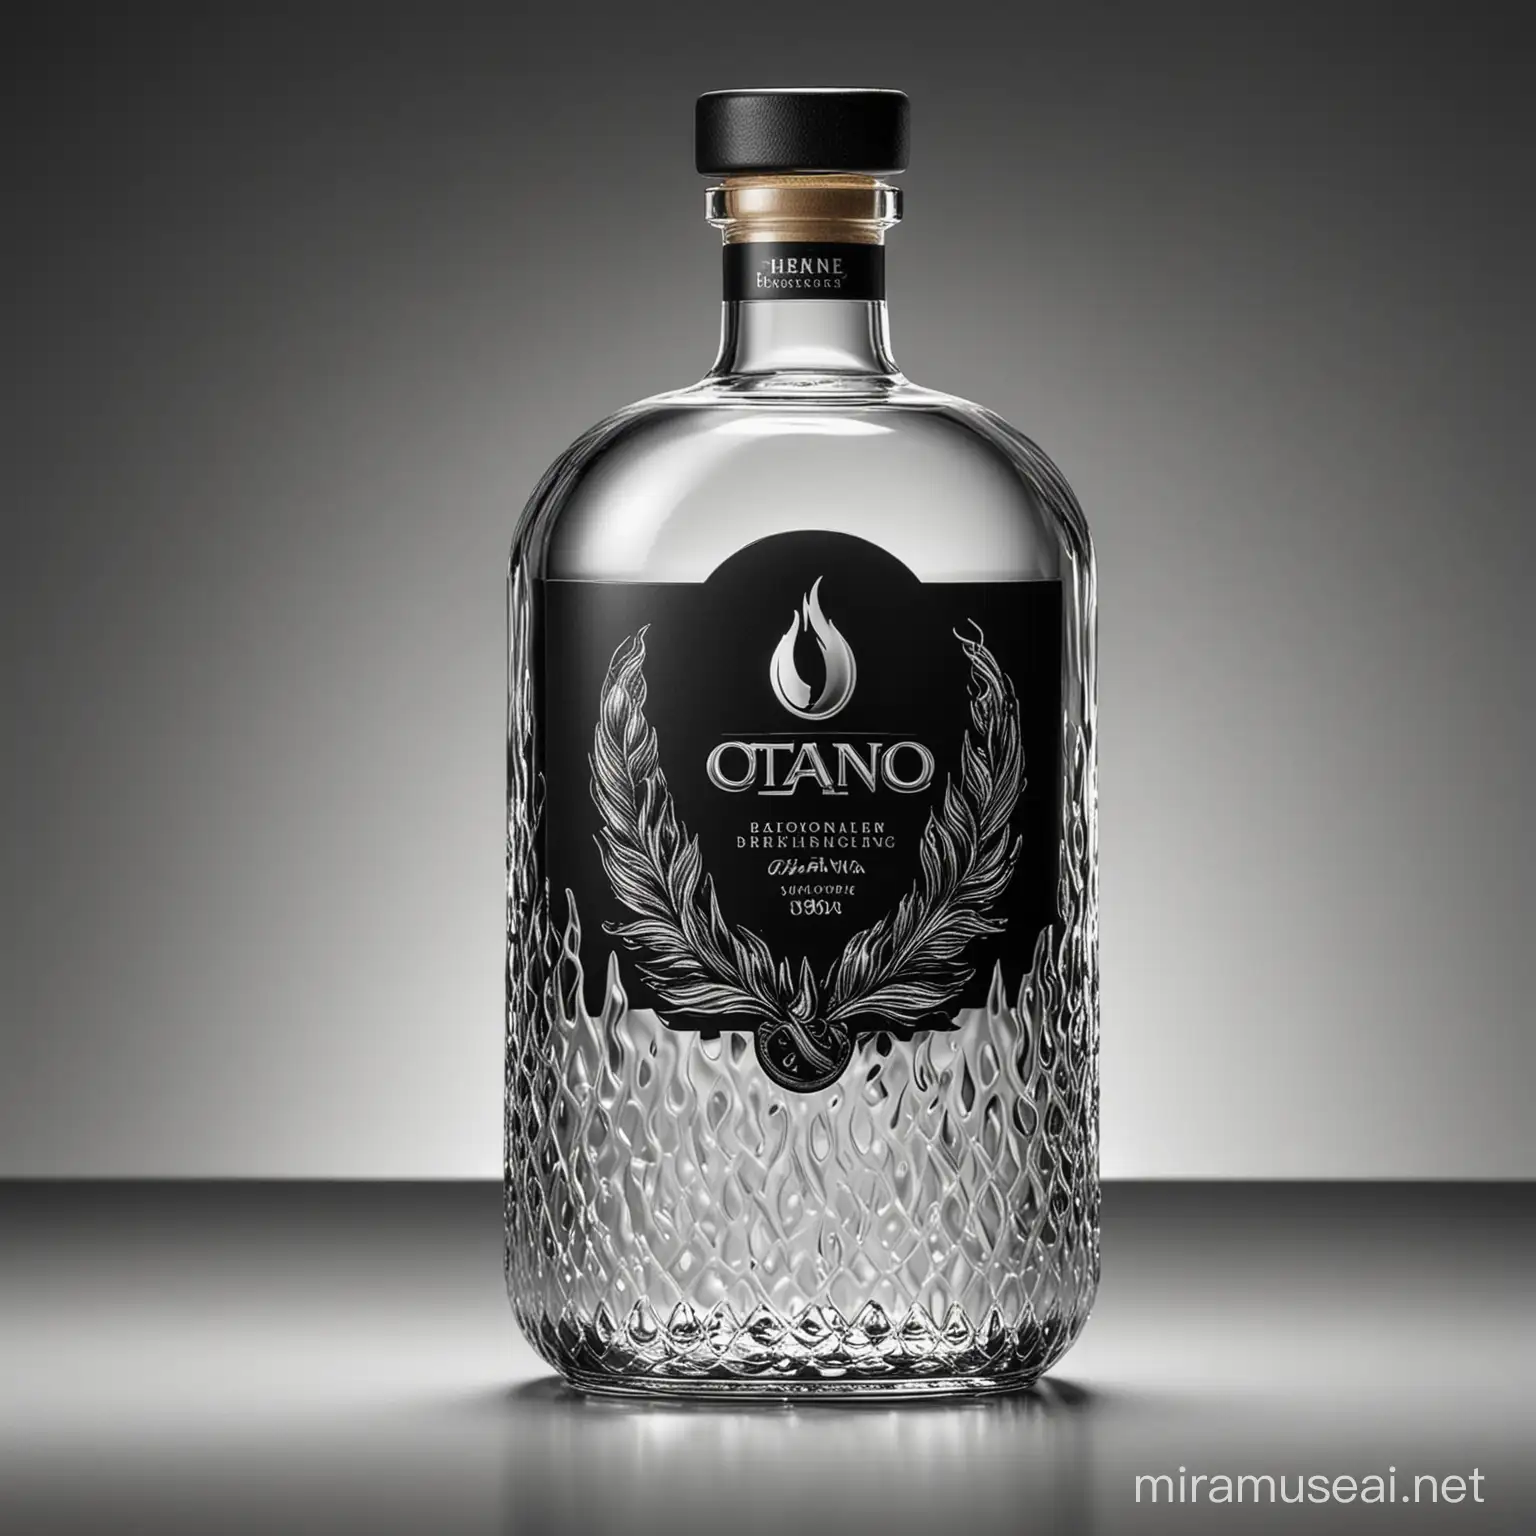 Octano Premium Health Liquor Elegant 500ml Glass Bottle with Silver and Black Texture